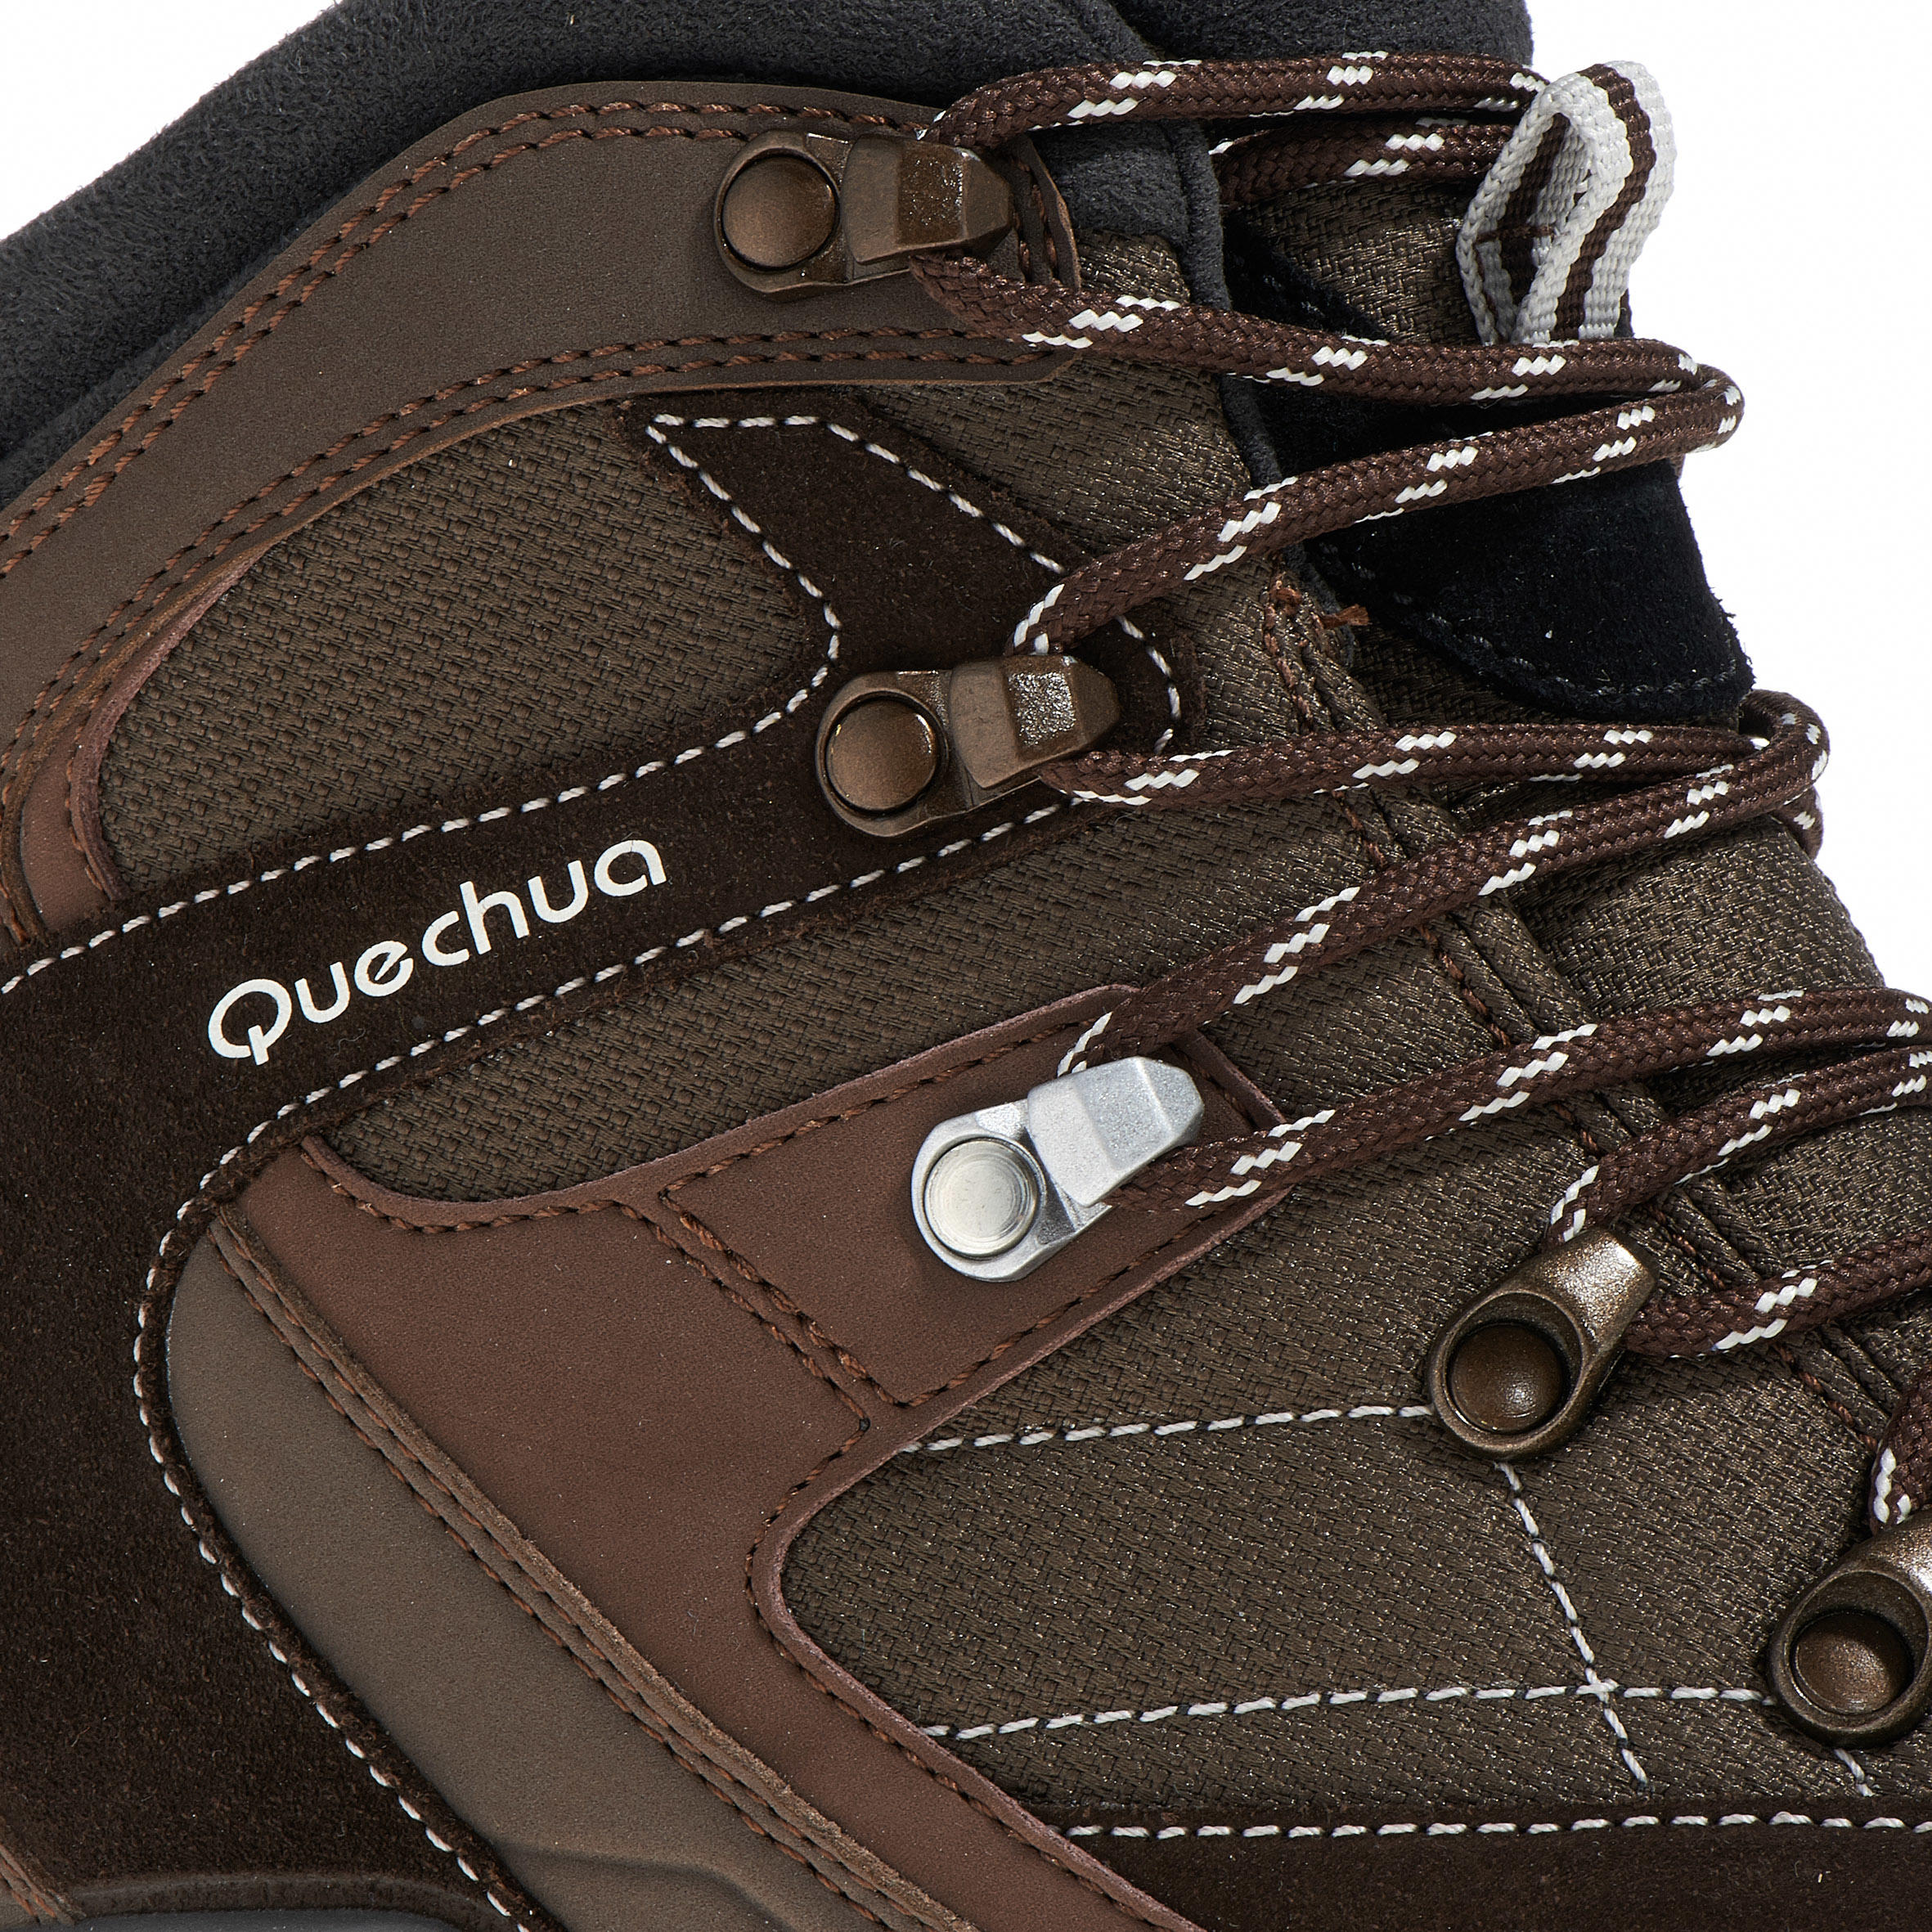 Quechua Forclaz 100 Men's High Waterproof Hiking Shoes 11/13